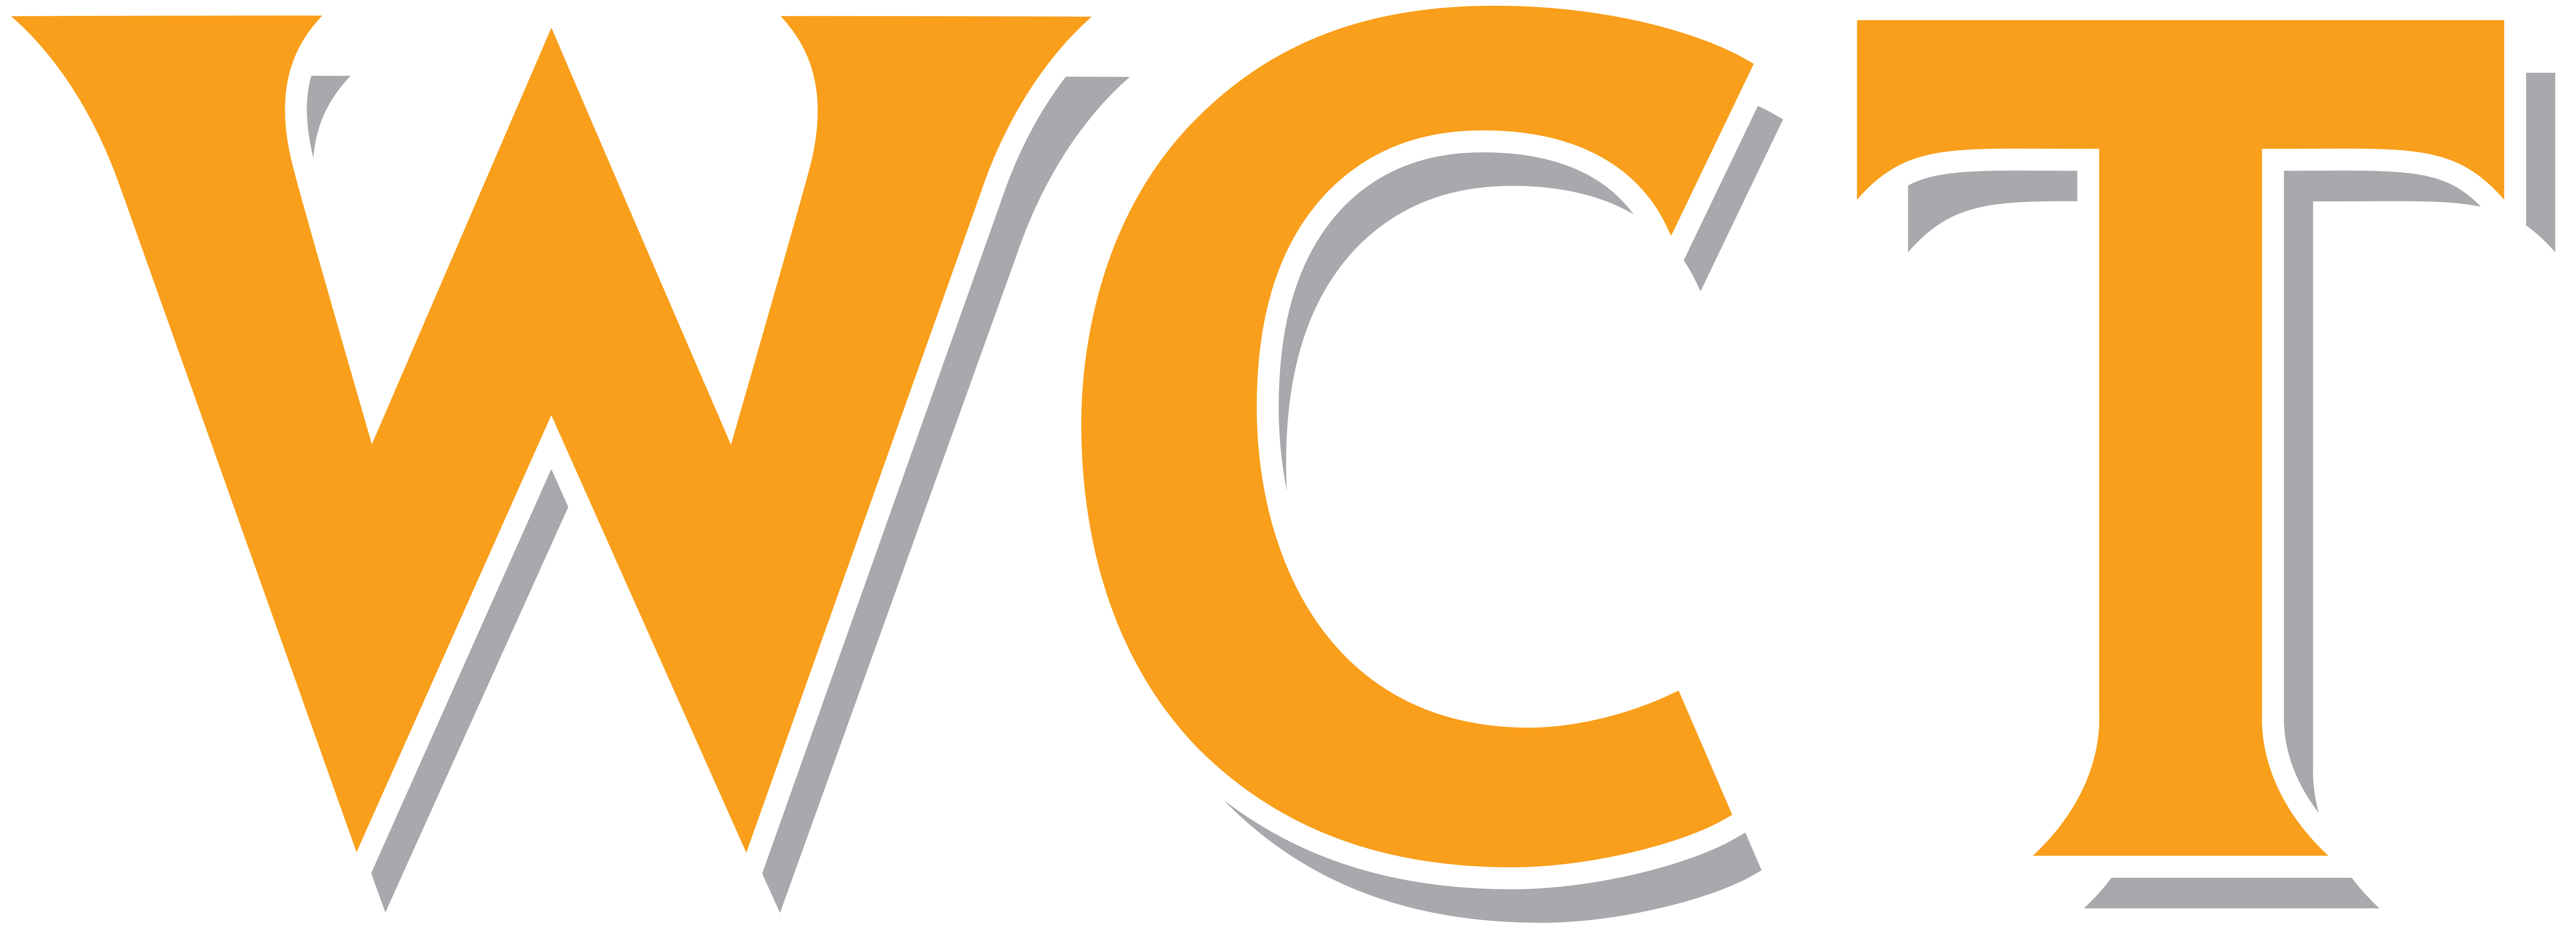 Wojcik Casting Team small logo